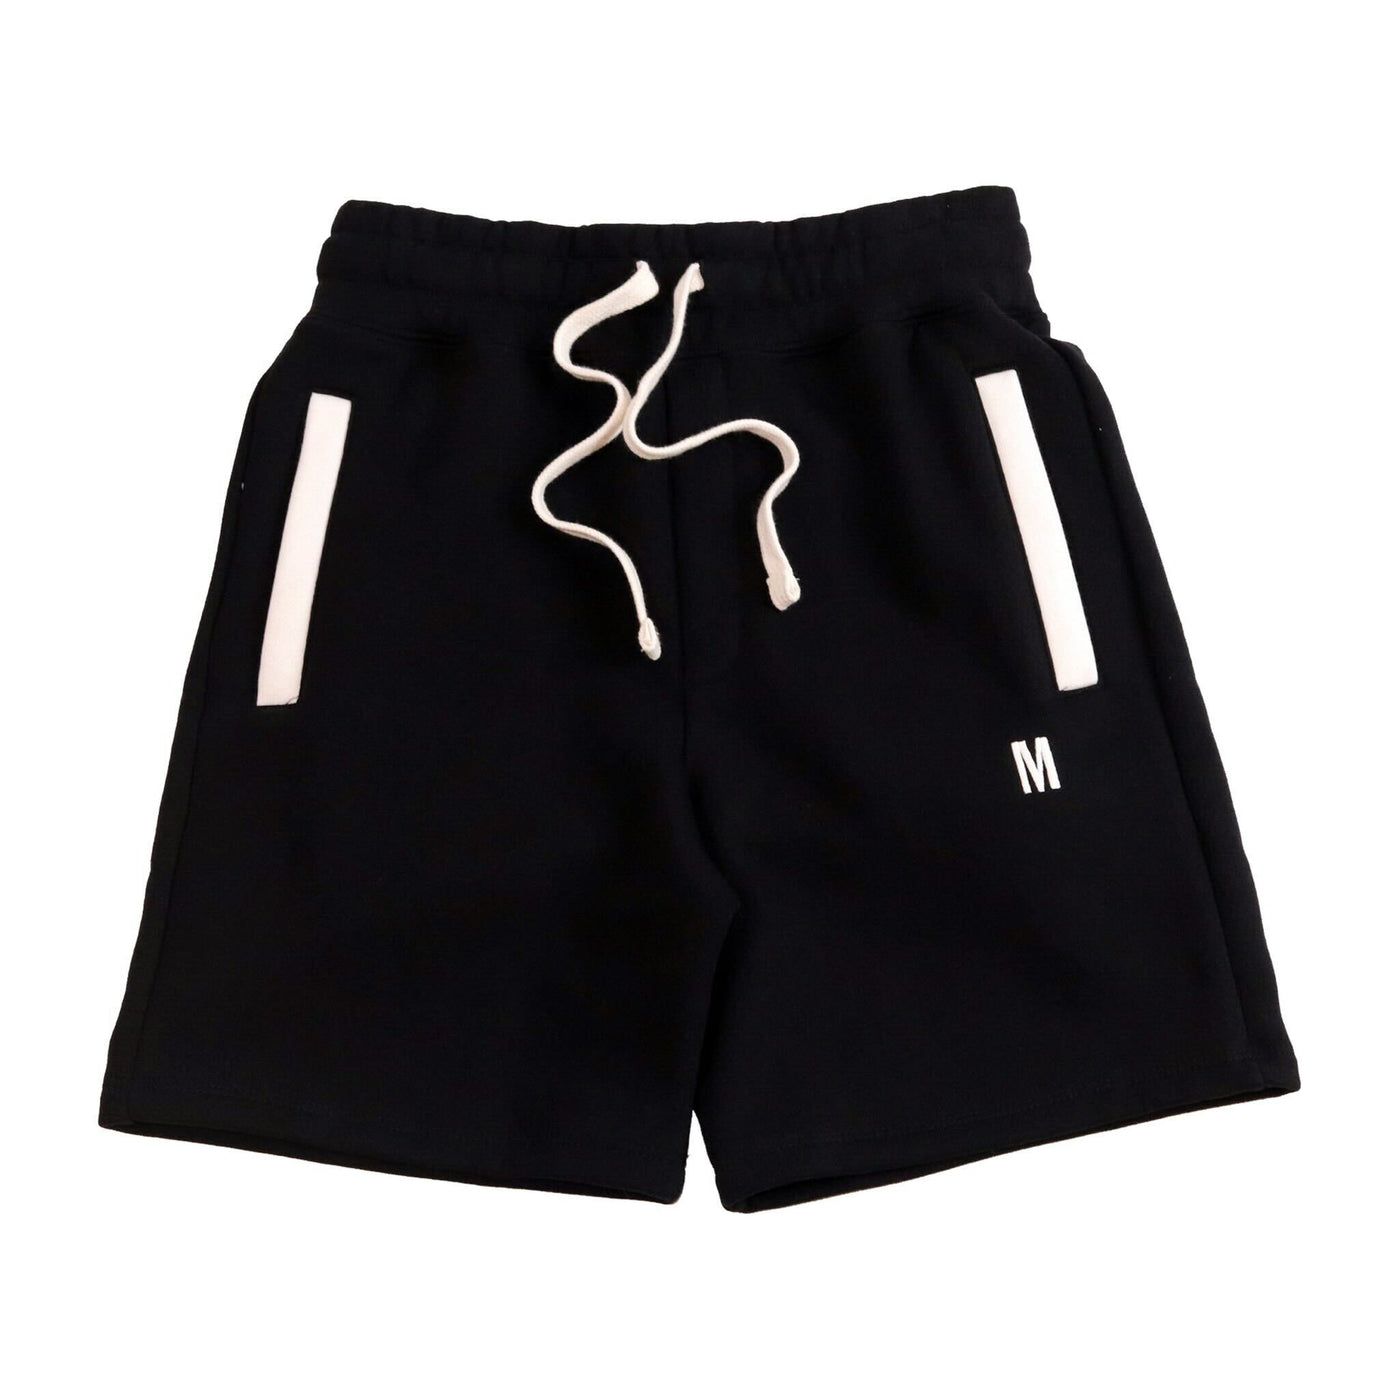 Limited Edition (Ultra) Marathon Shorts - Black/Cream